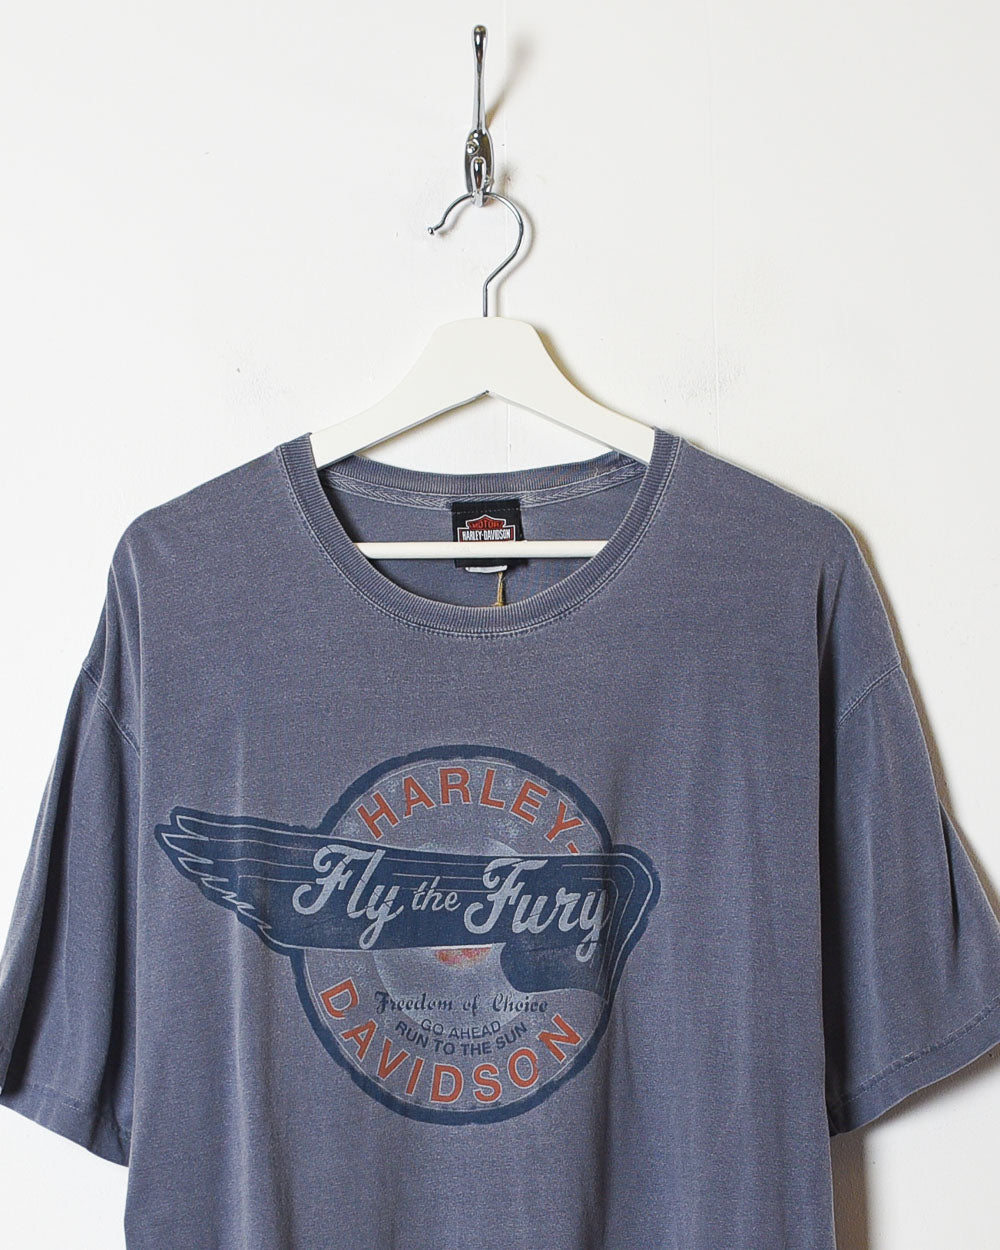 Grey Harley Davidson Fly The Fury T-Shirt - X-Large